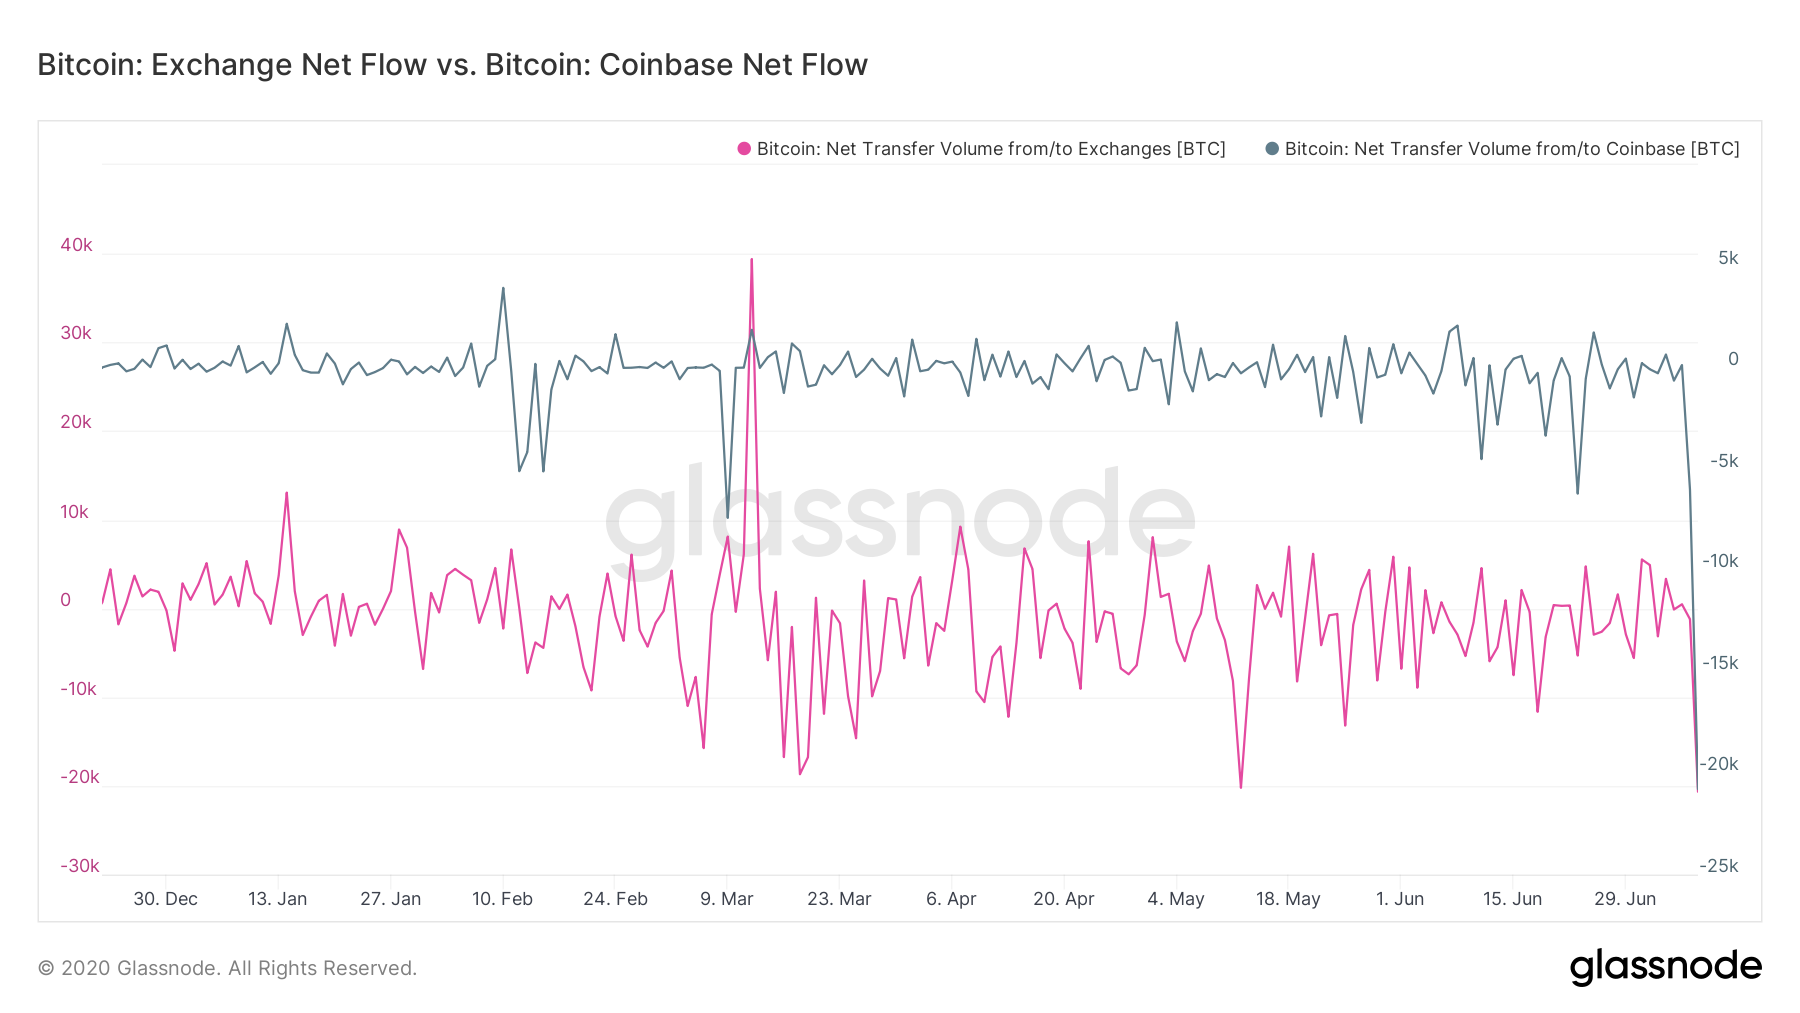 All Exchanges versus Coinbase net Bitcoin flow. Source: Glassnode